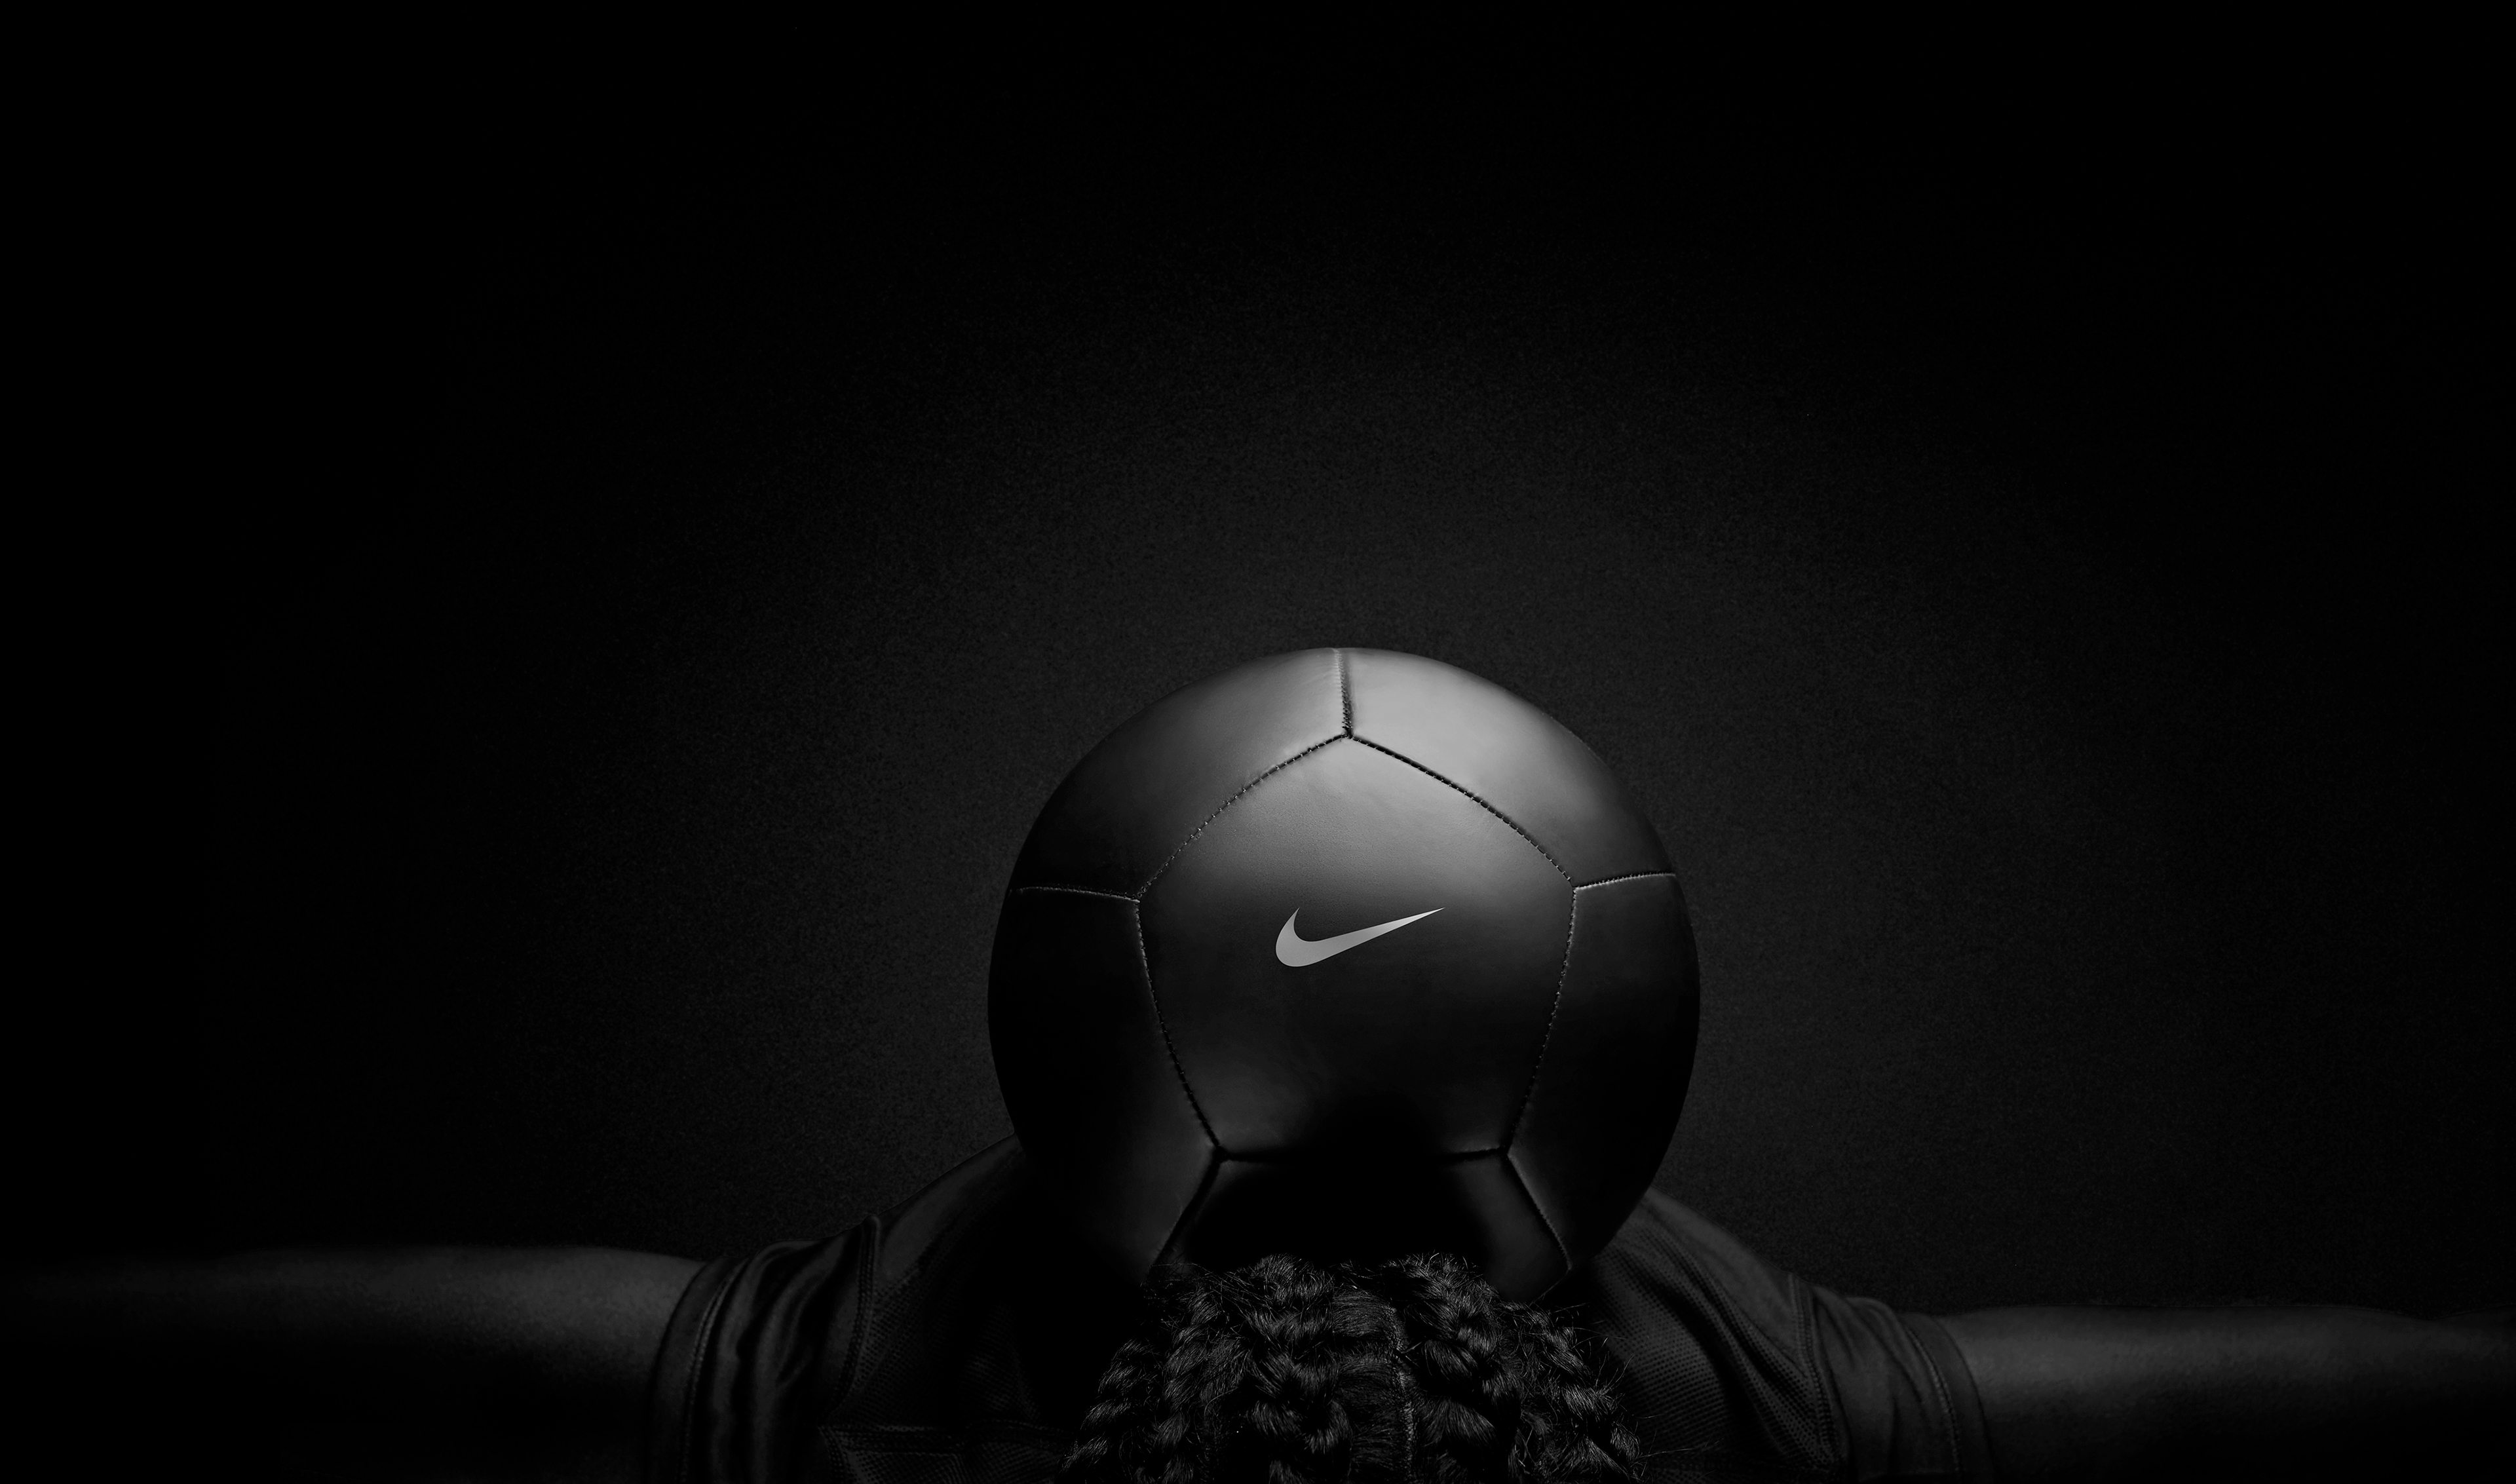 Nike Black Play Football, HD Sports, 4k Wallpaper, Image